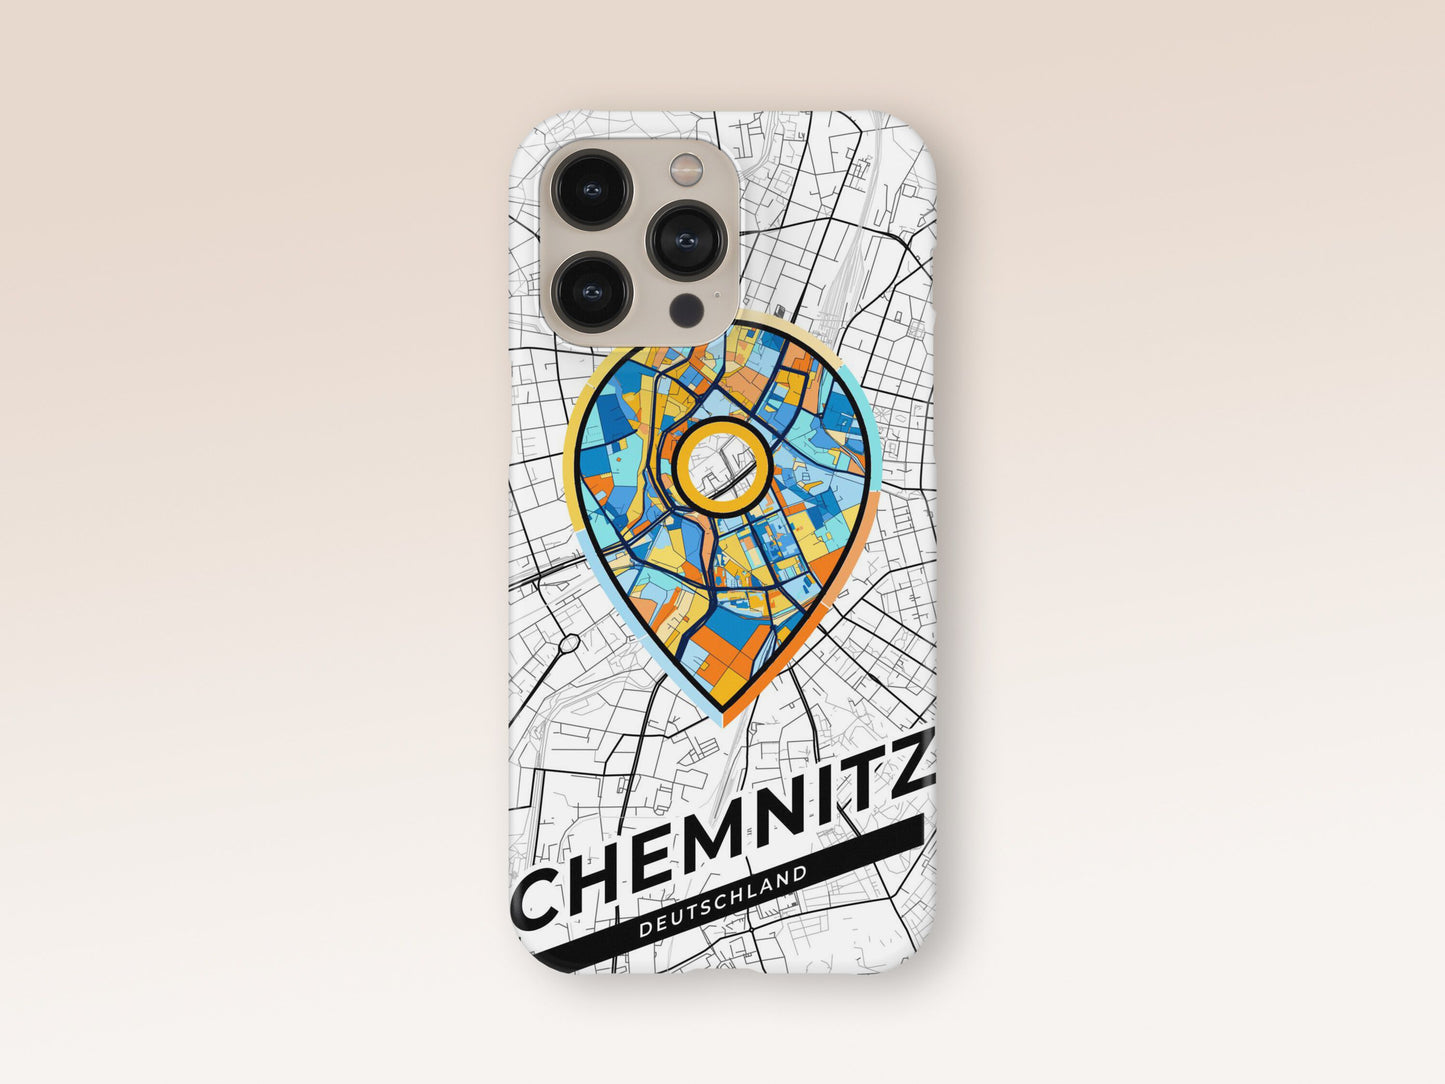 Chemnitz Deutschland slim phone case with colorful icon. Birthday, wedding or housewarming gift. Couple match cases. 1